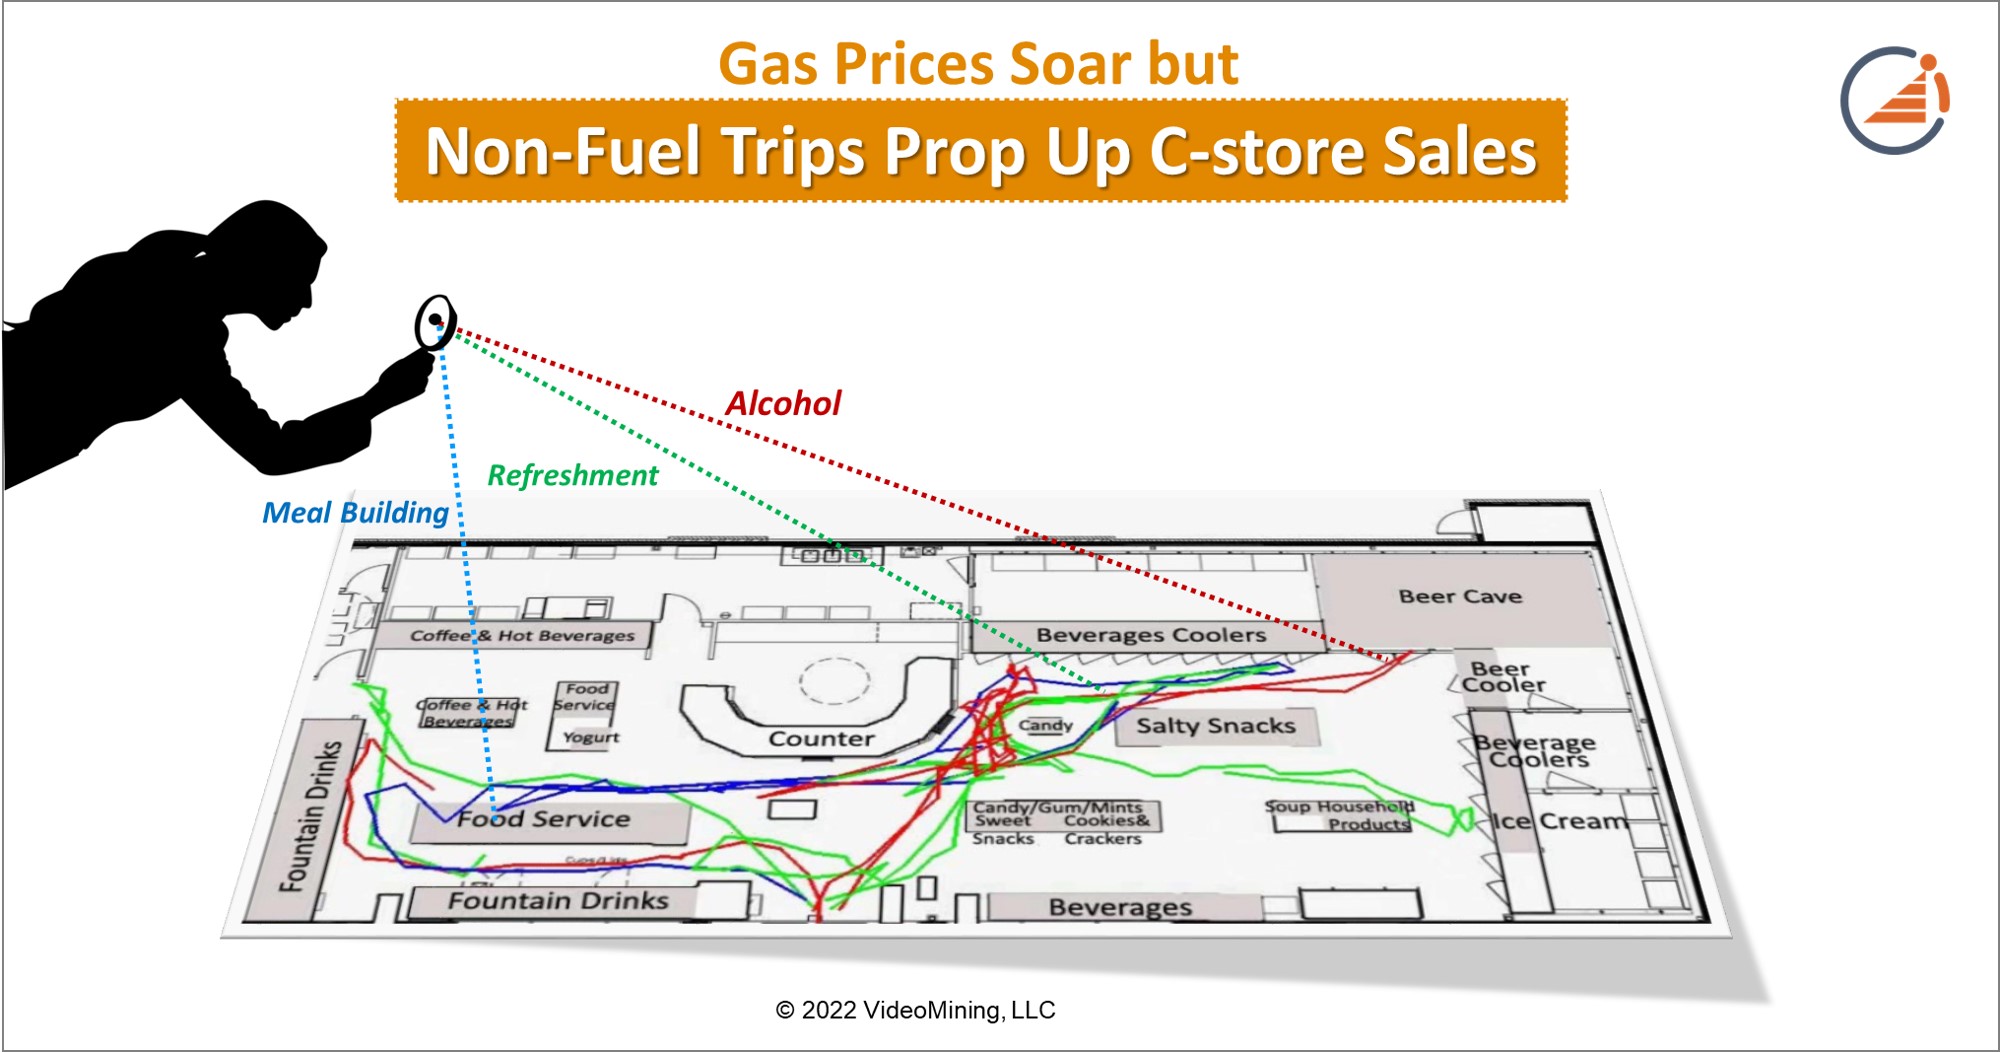 Non-Fuel Trips Prop Up C-store Sales